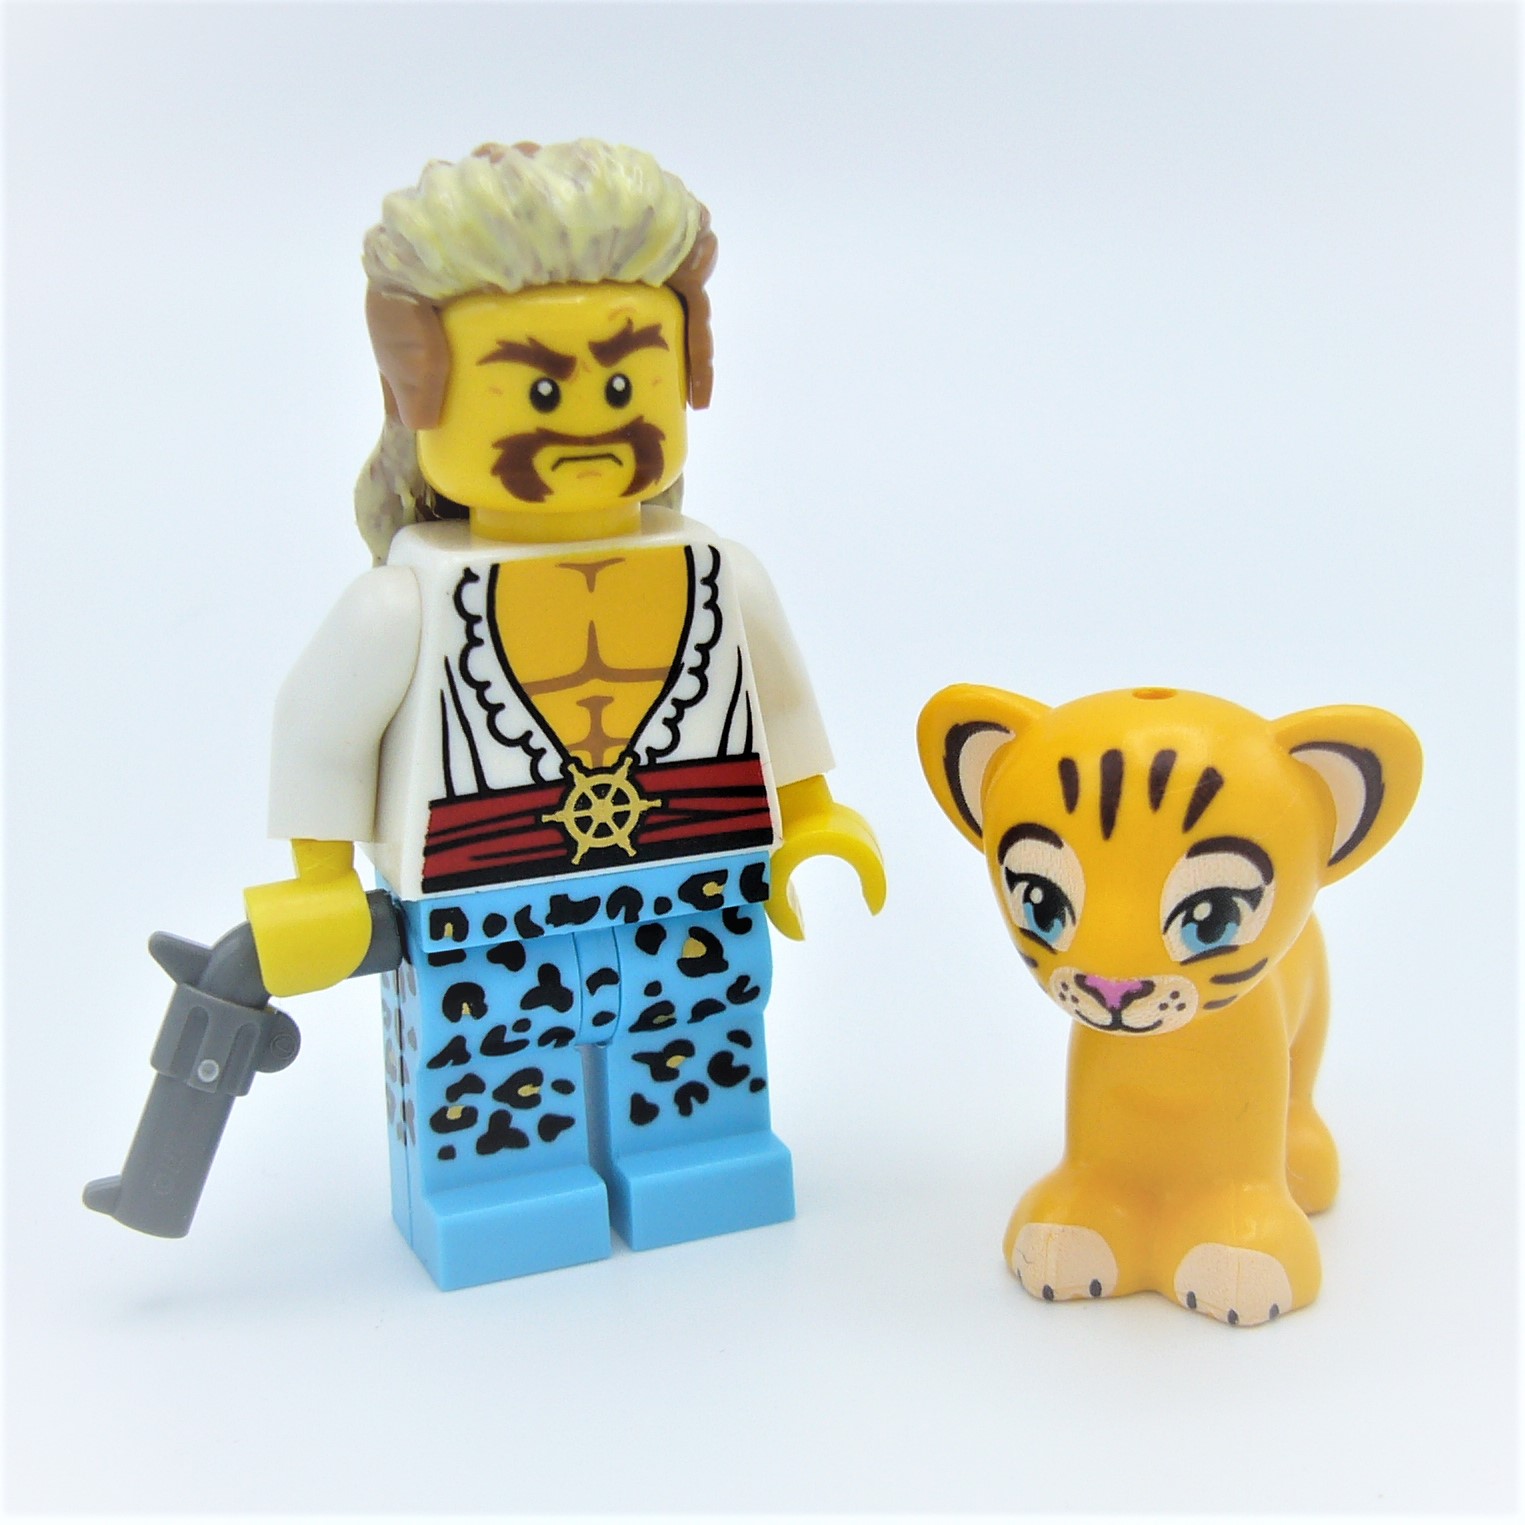 White Tiger Printed On LEGO Parts Custom Designed Minifigure 